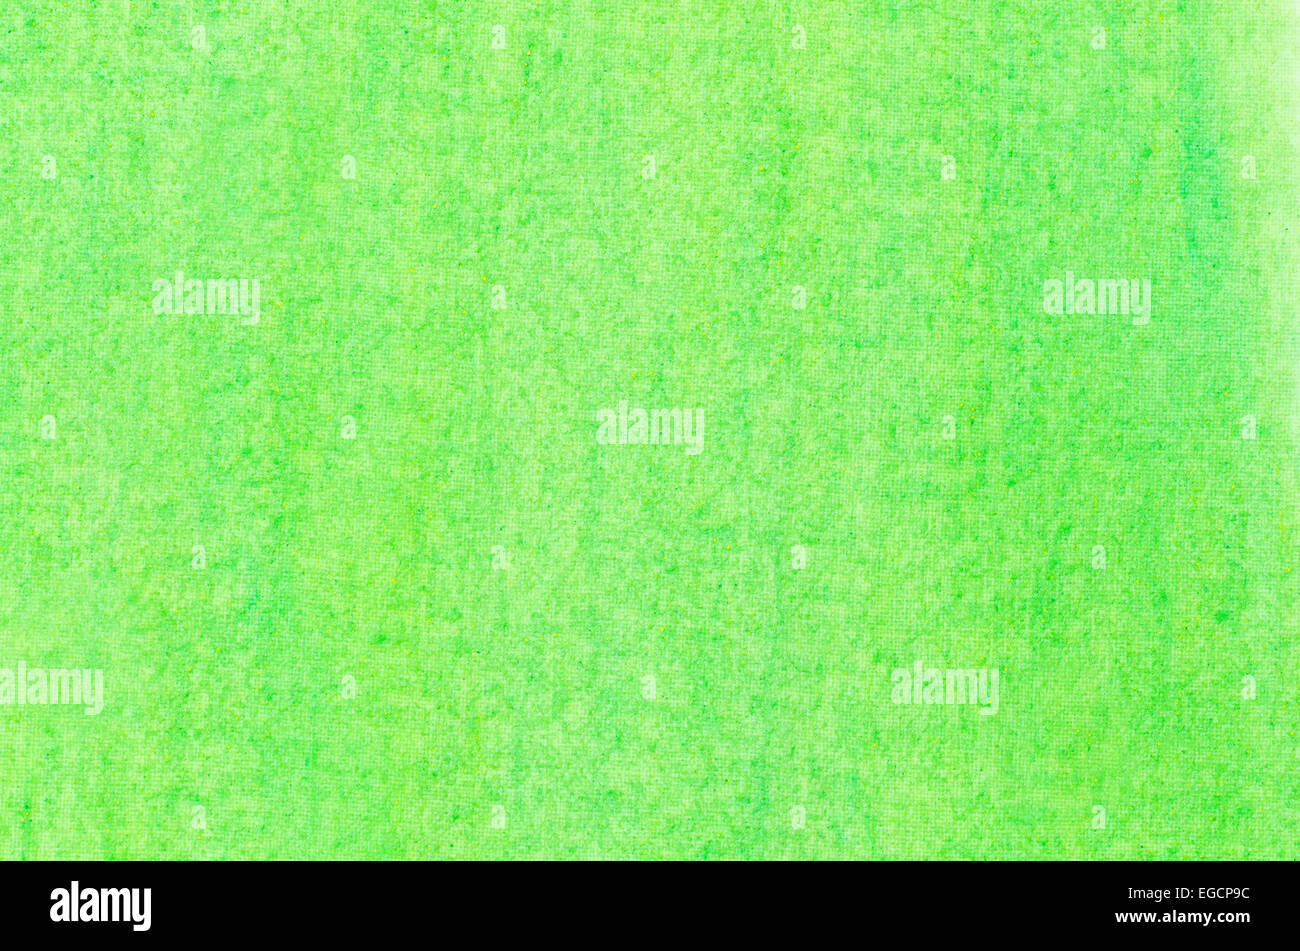 Kunst-grün bemalt abstrakten Hintergrundtextur Stockfoto